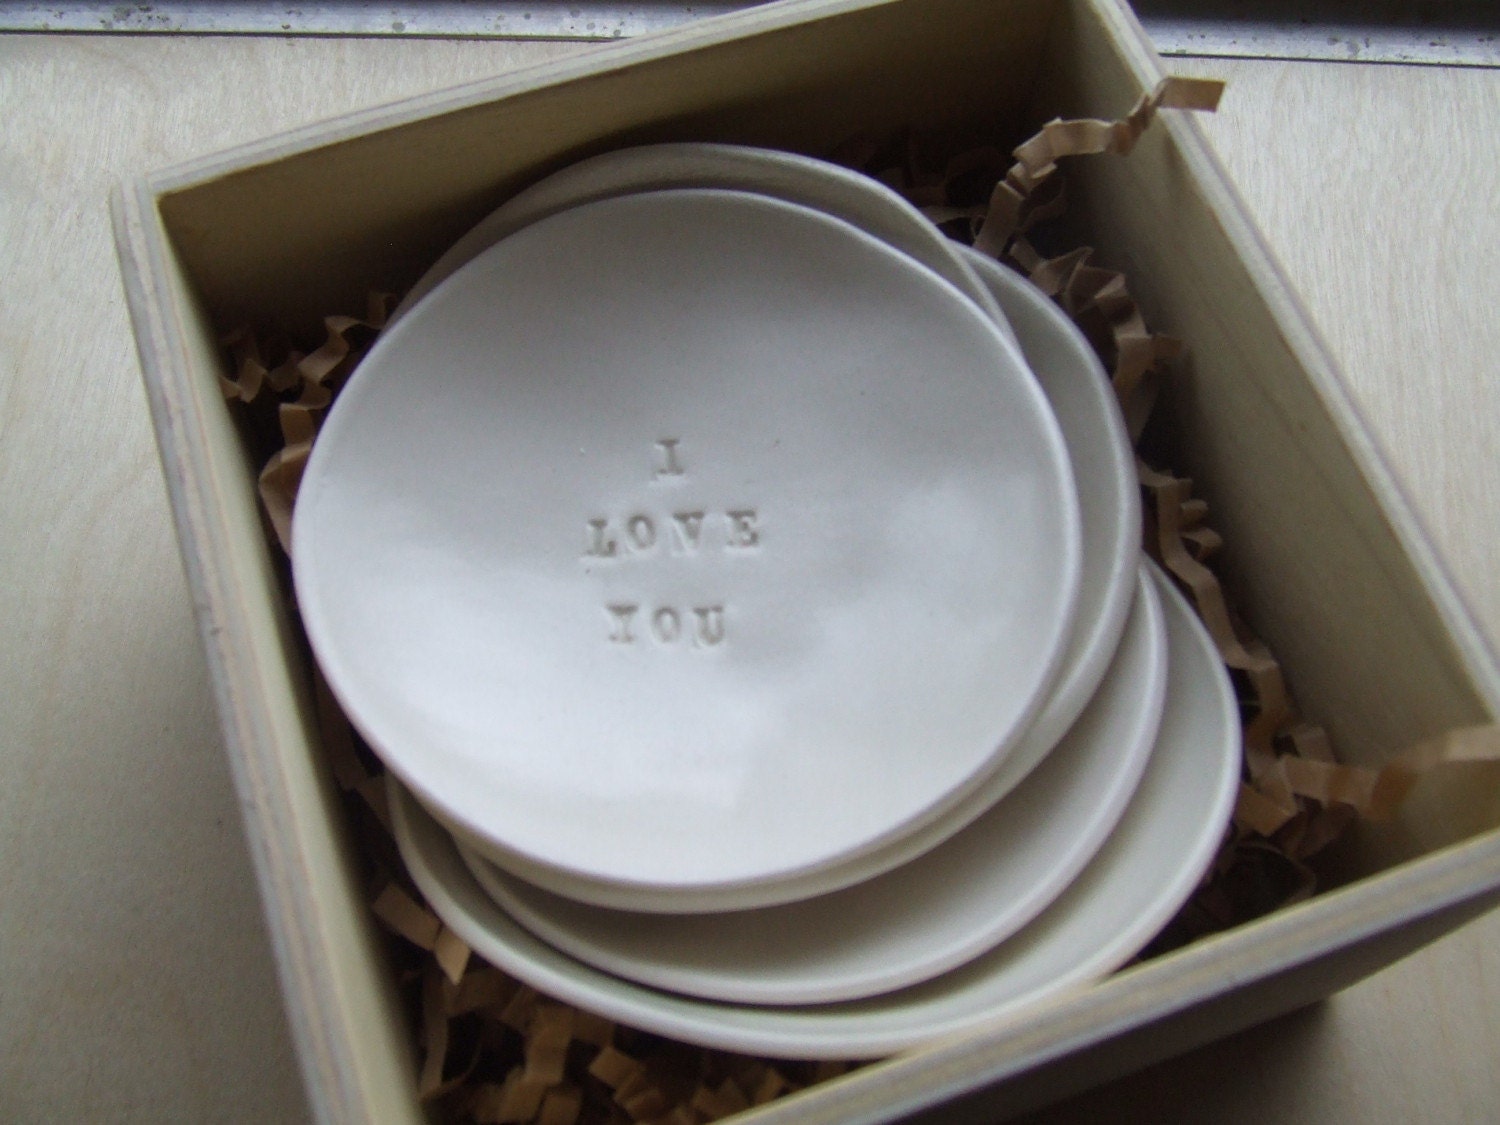 I LOVE YOU white ceramic tiny text bowl 